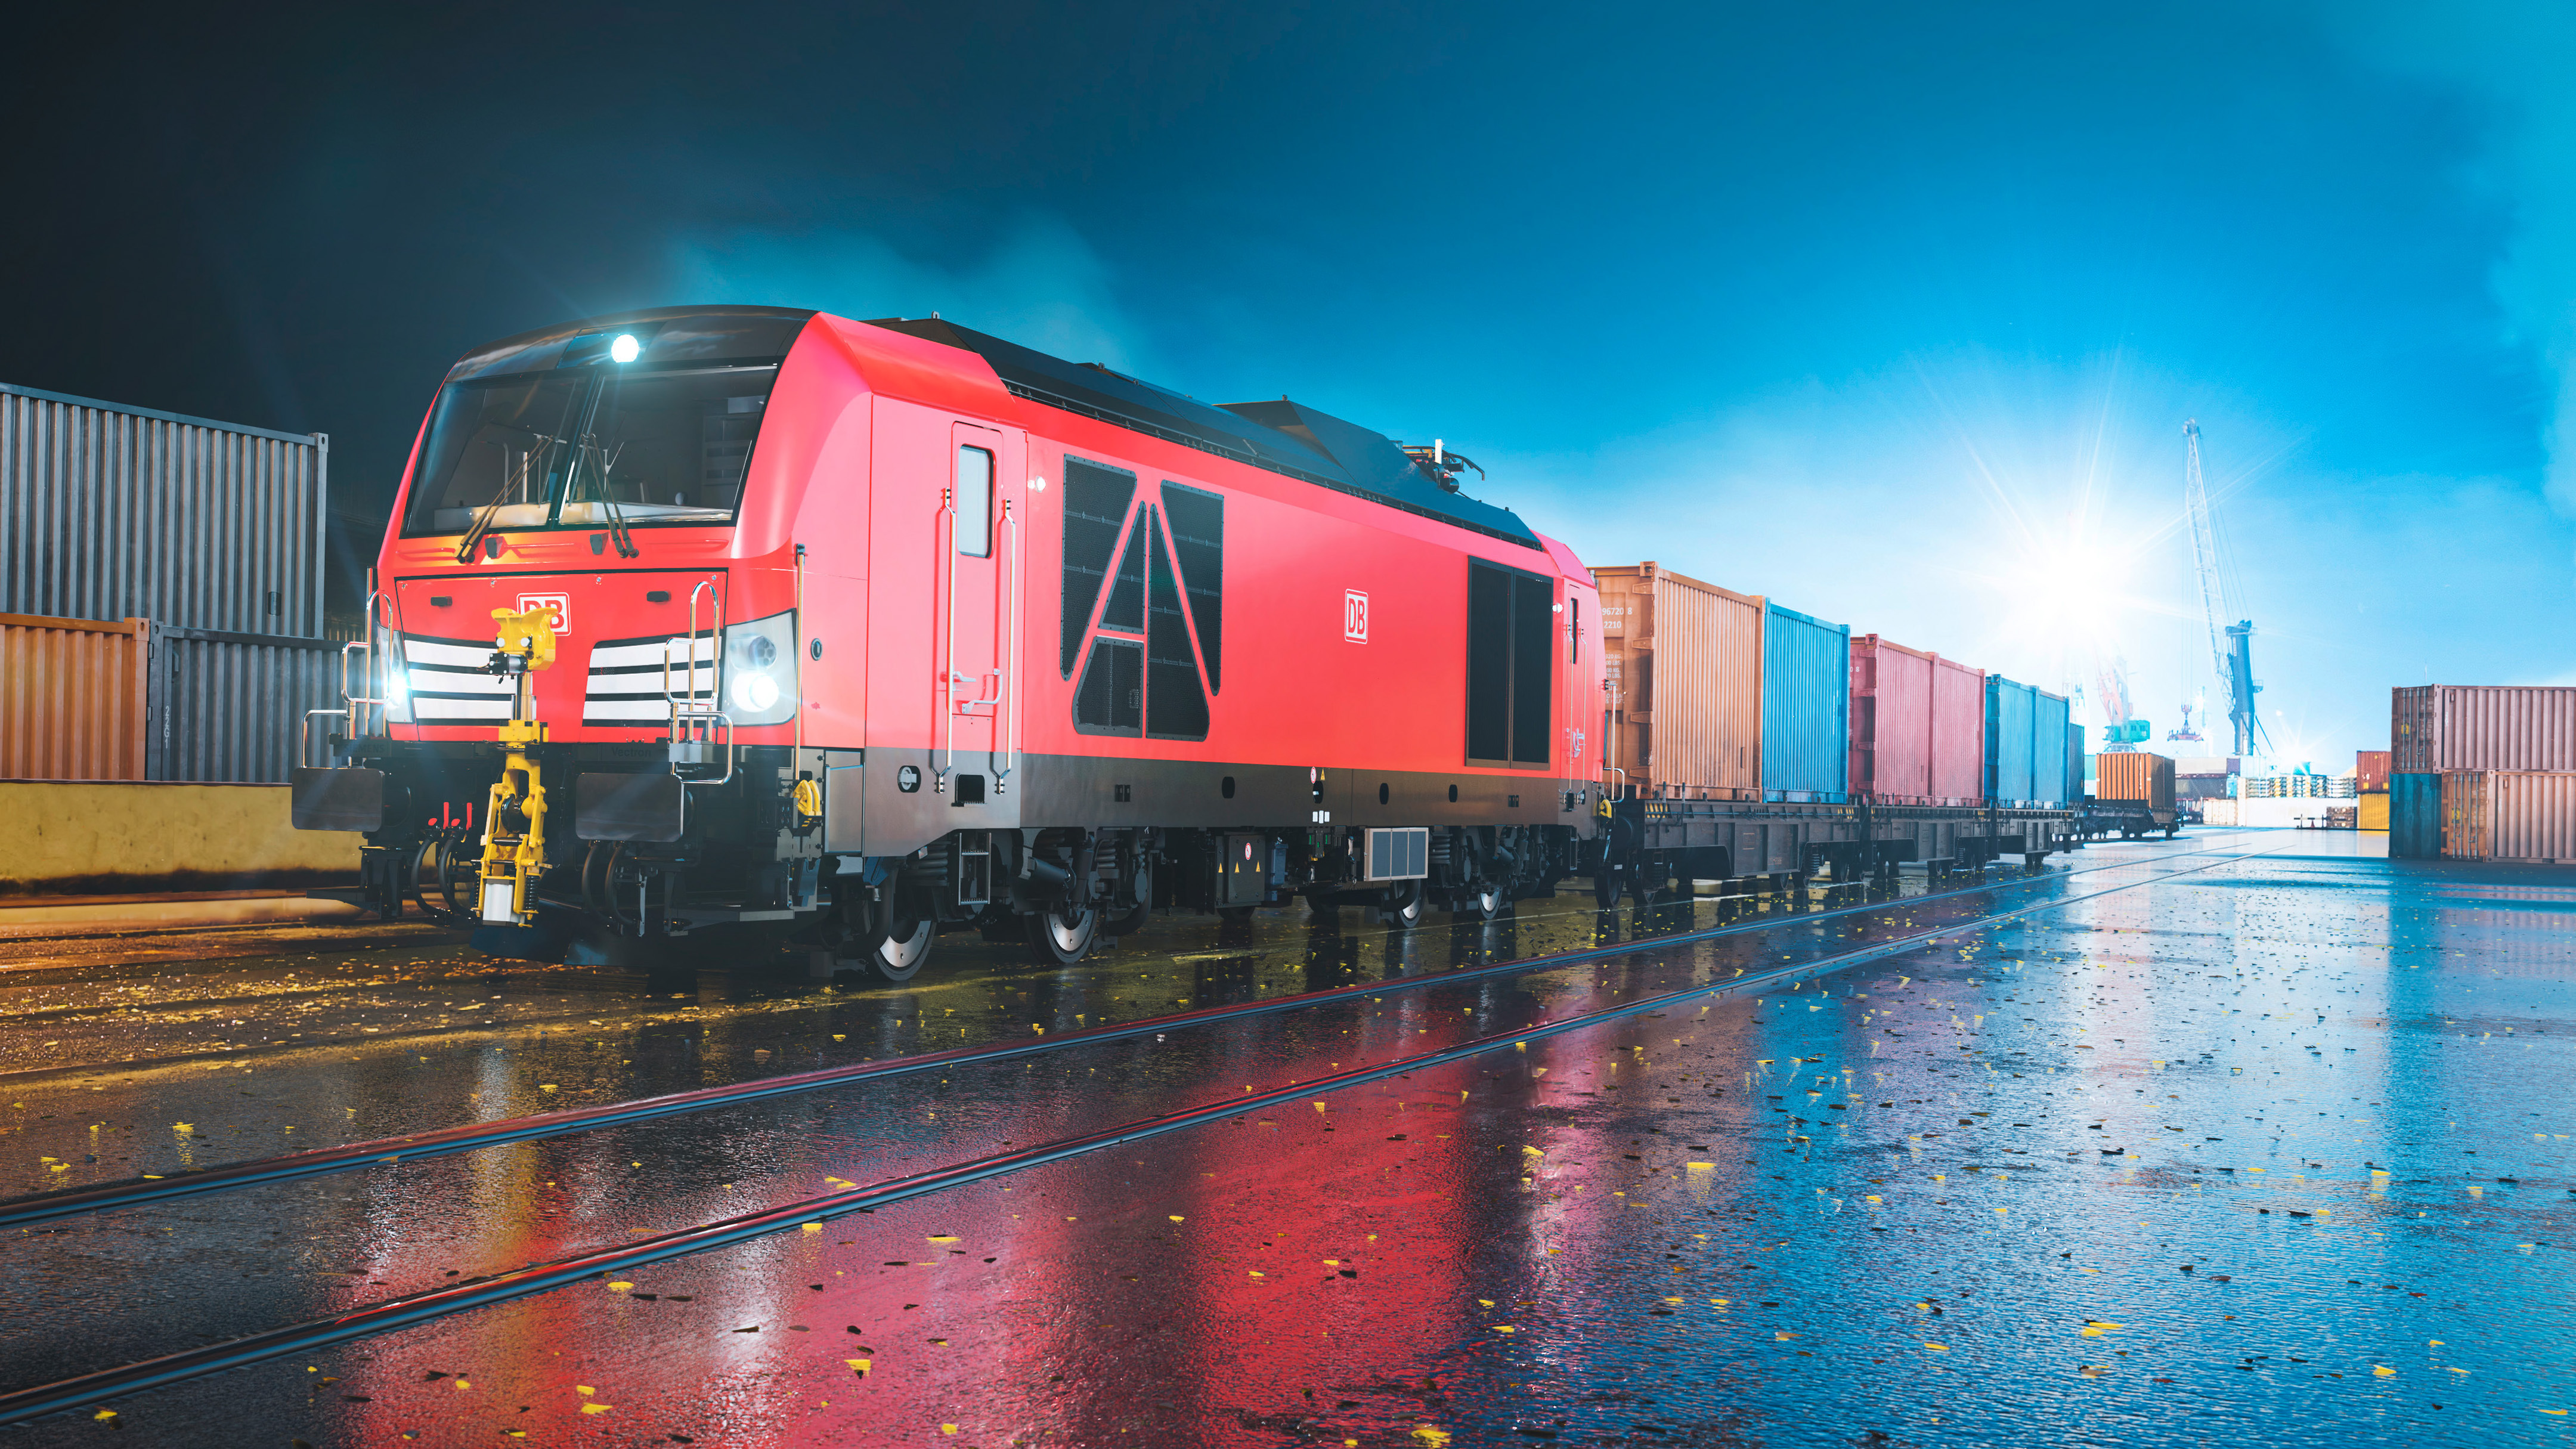 Vectron Dual Mode hybrid locomotive for Deutsche Bahn